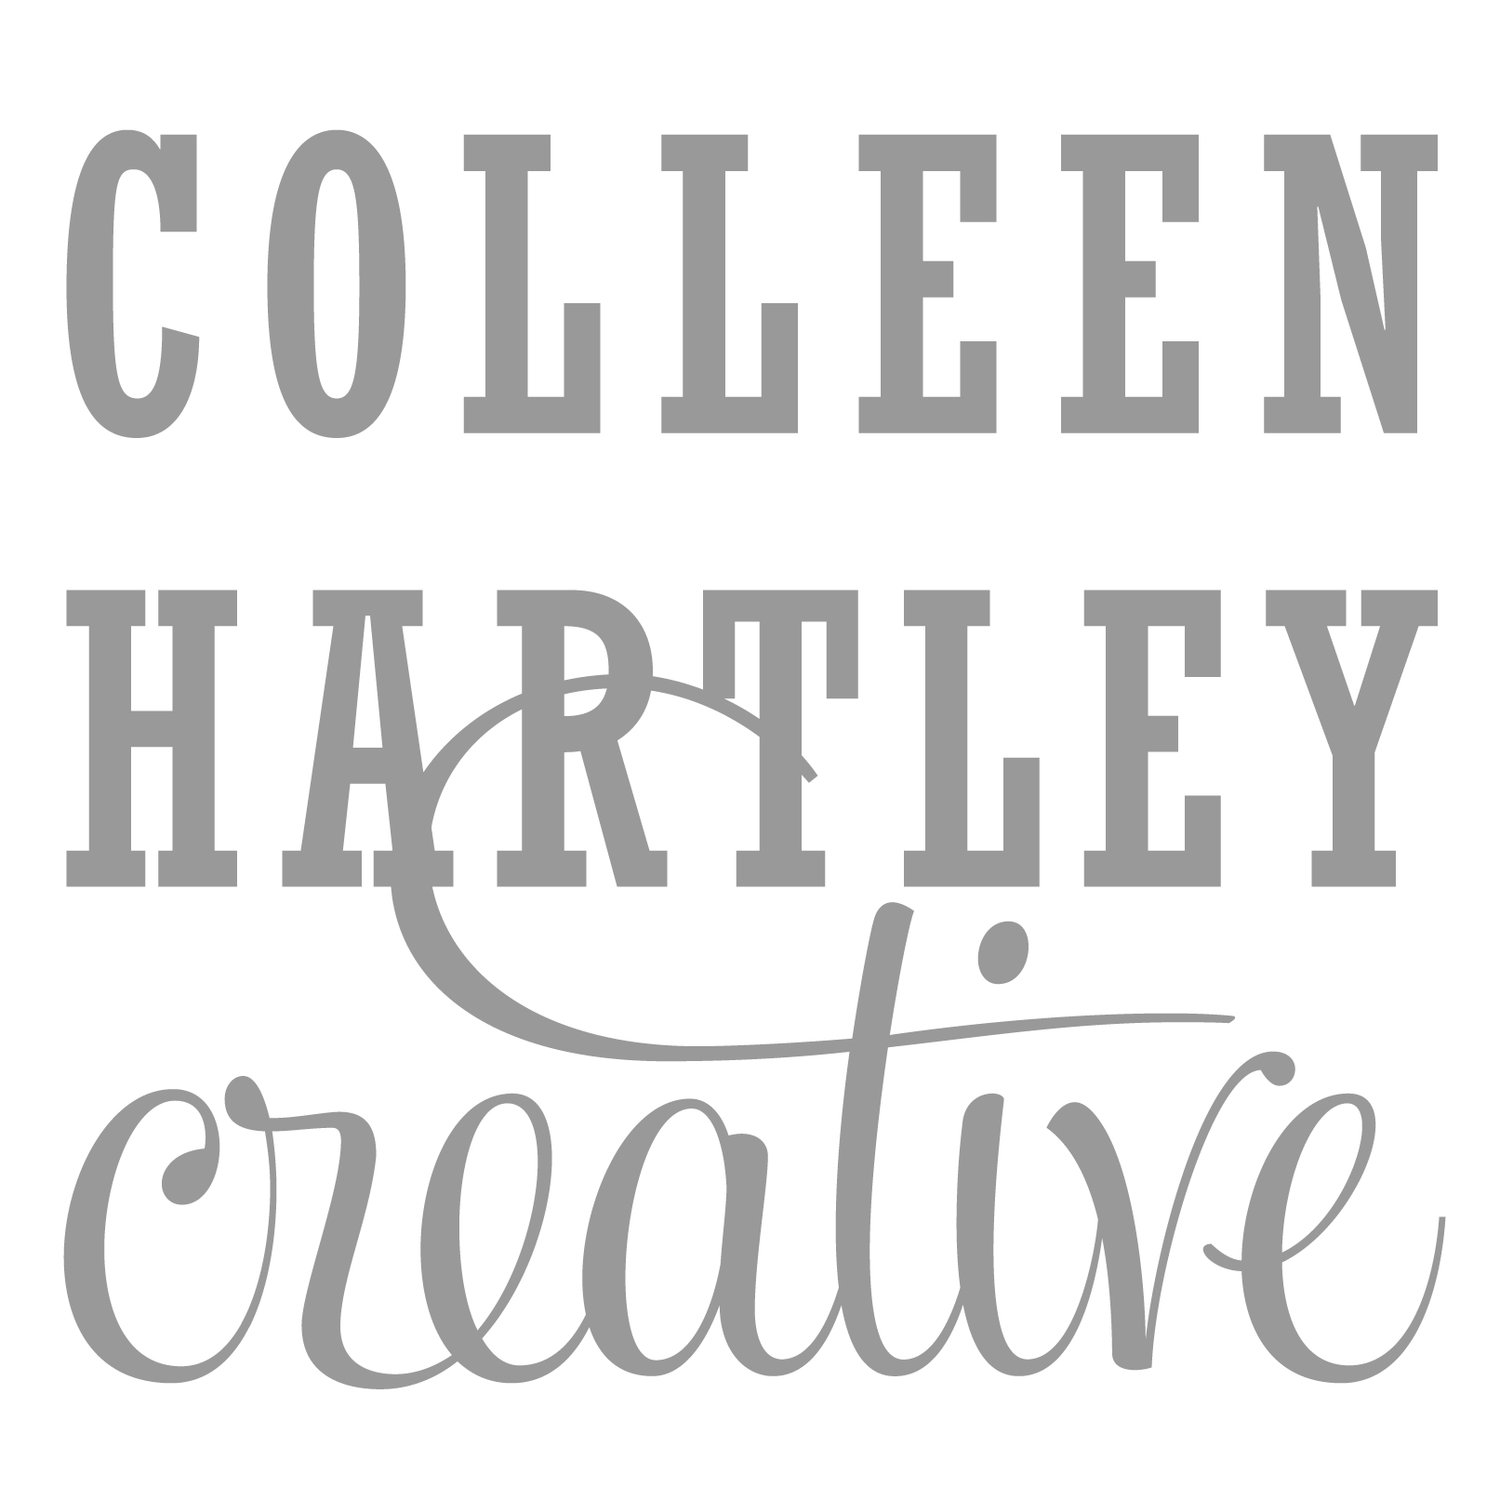 Colleen Hartley Creative